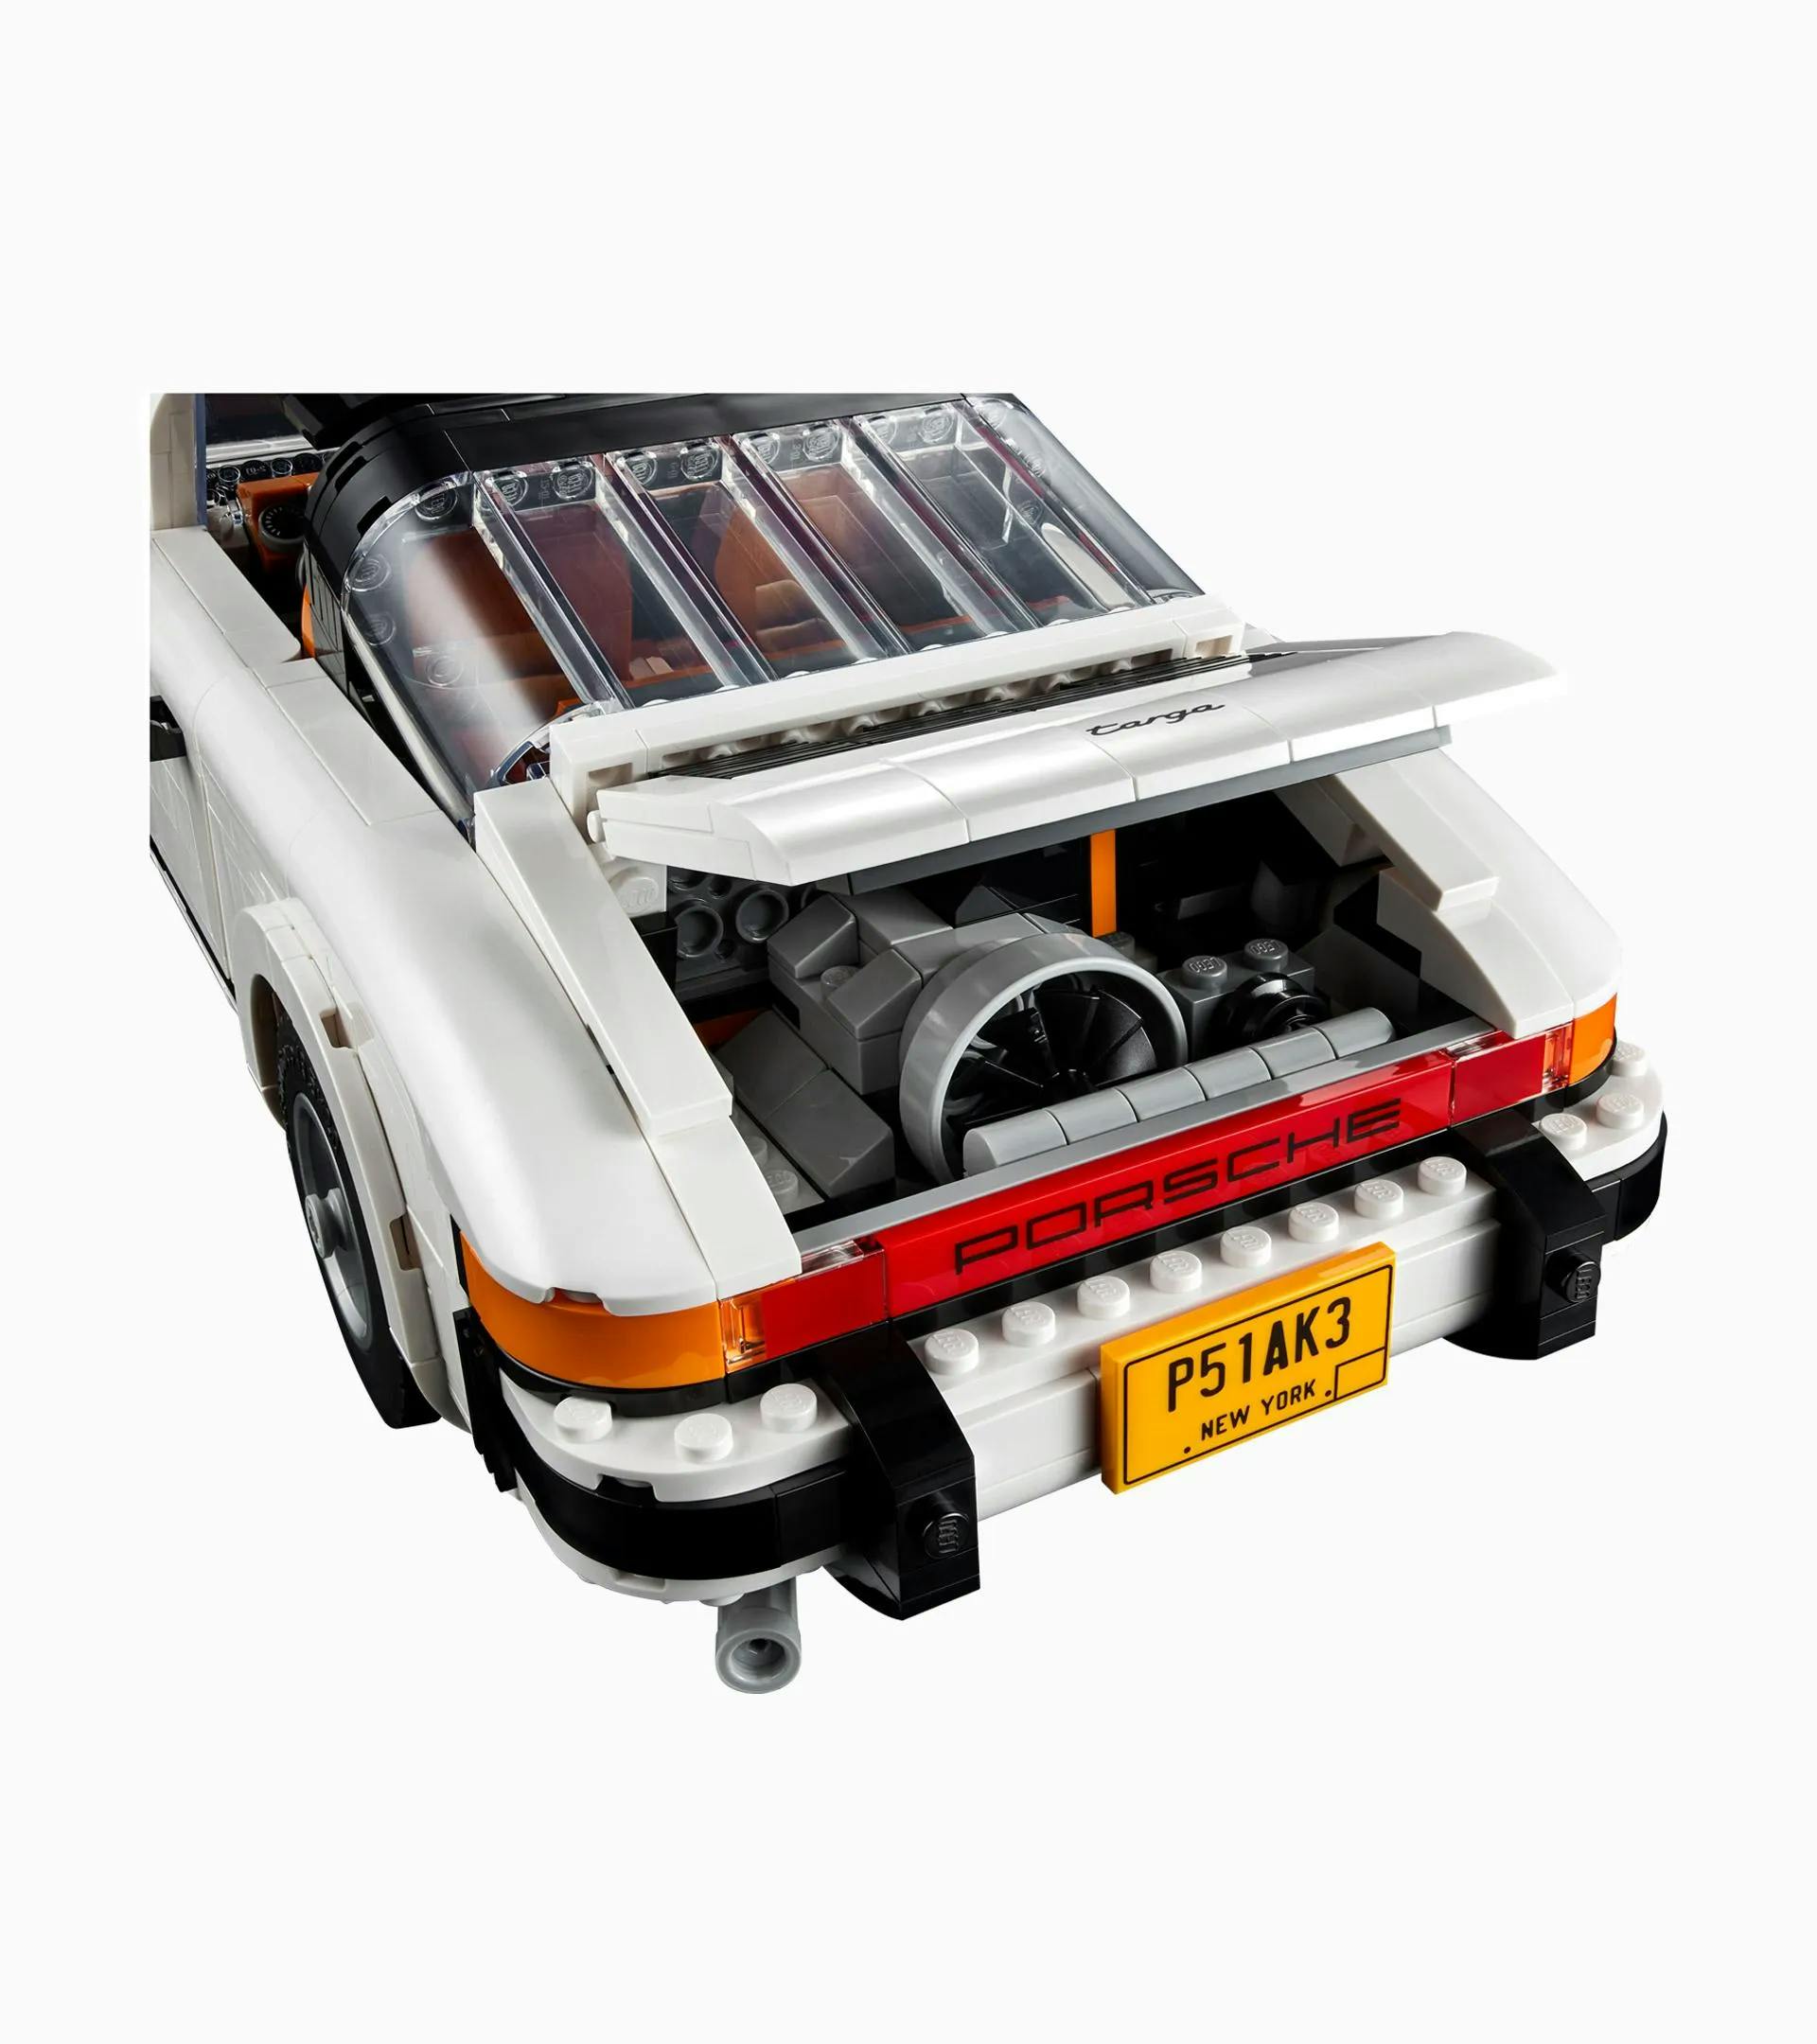 Set de LEGO® Creator de 911 Turbo y 911 Targa 4